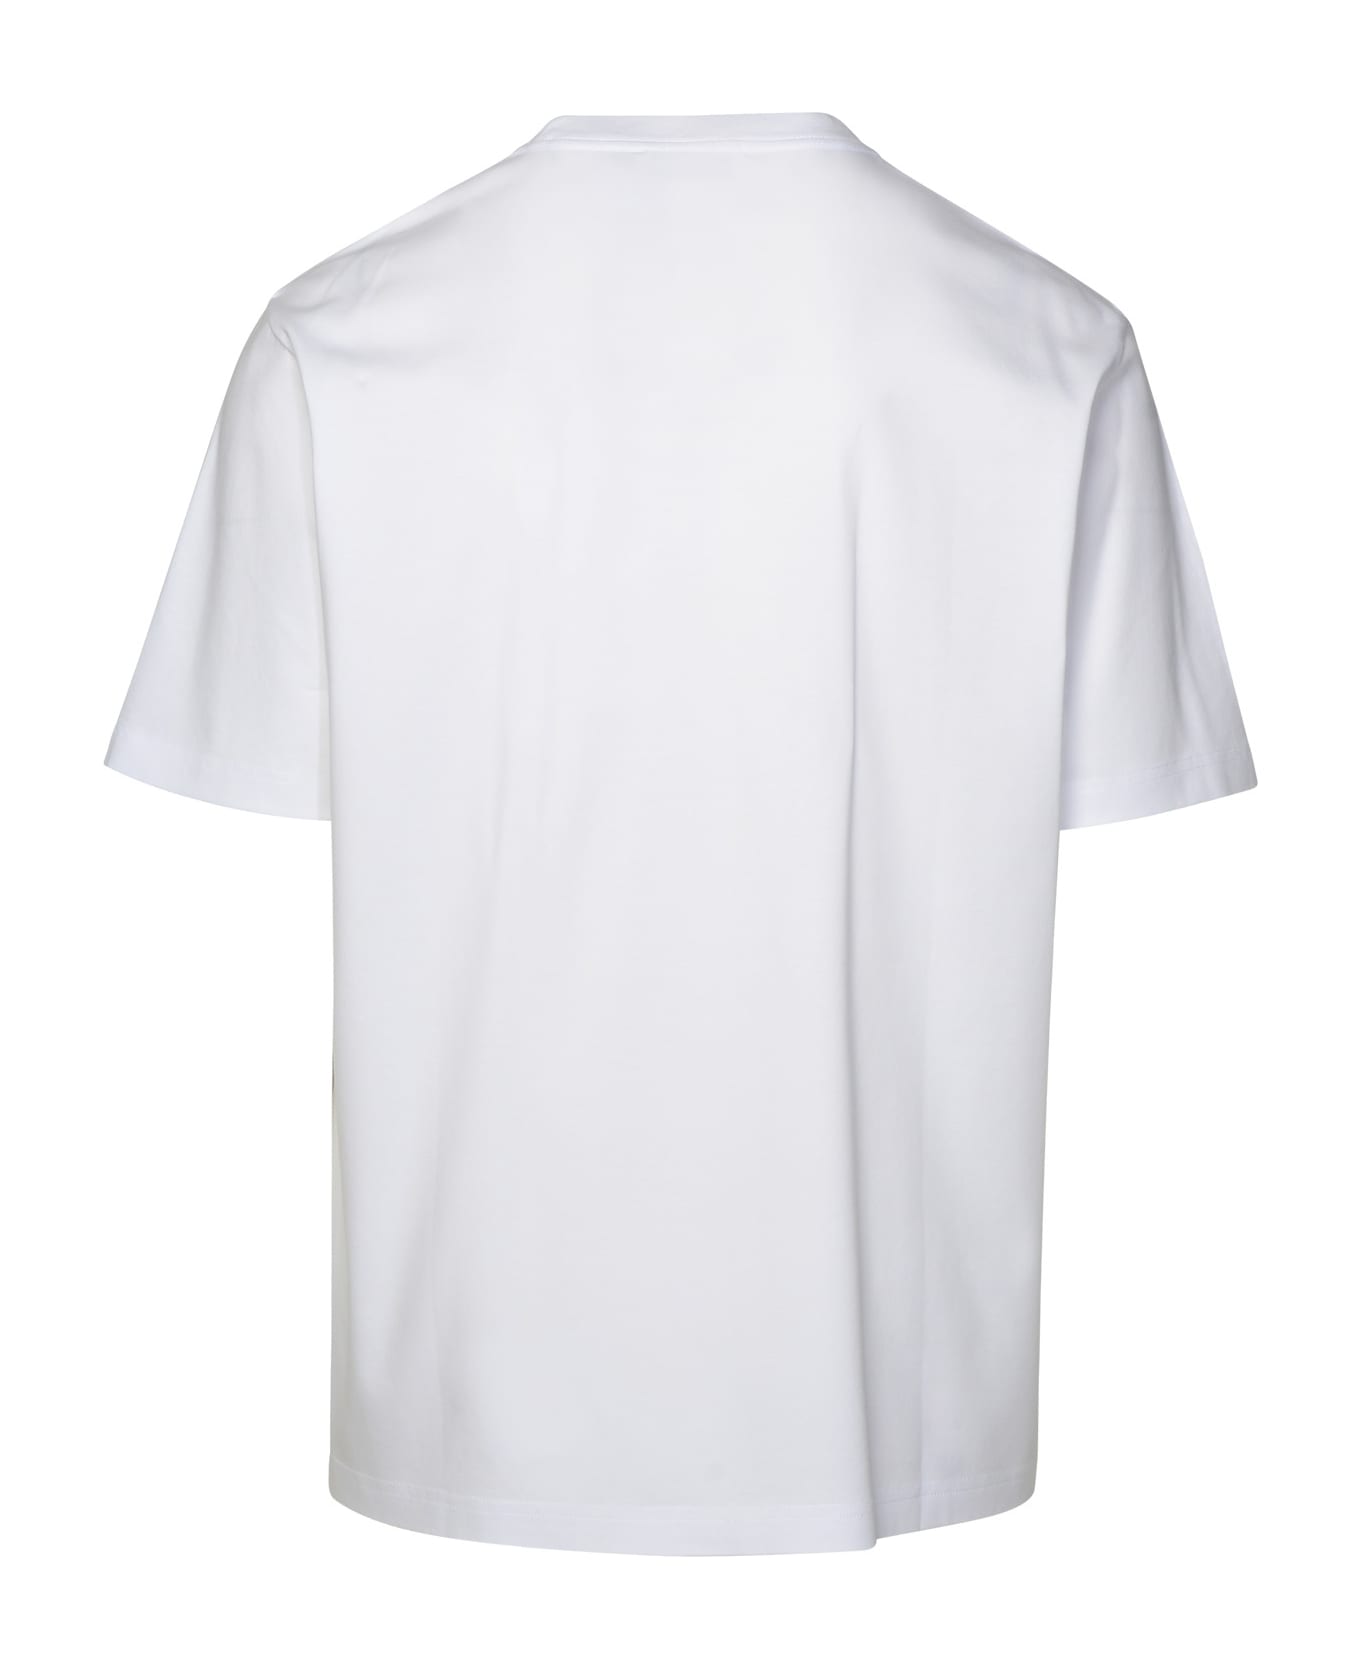 Lanvin White Cotton T-shirt - Optic white